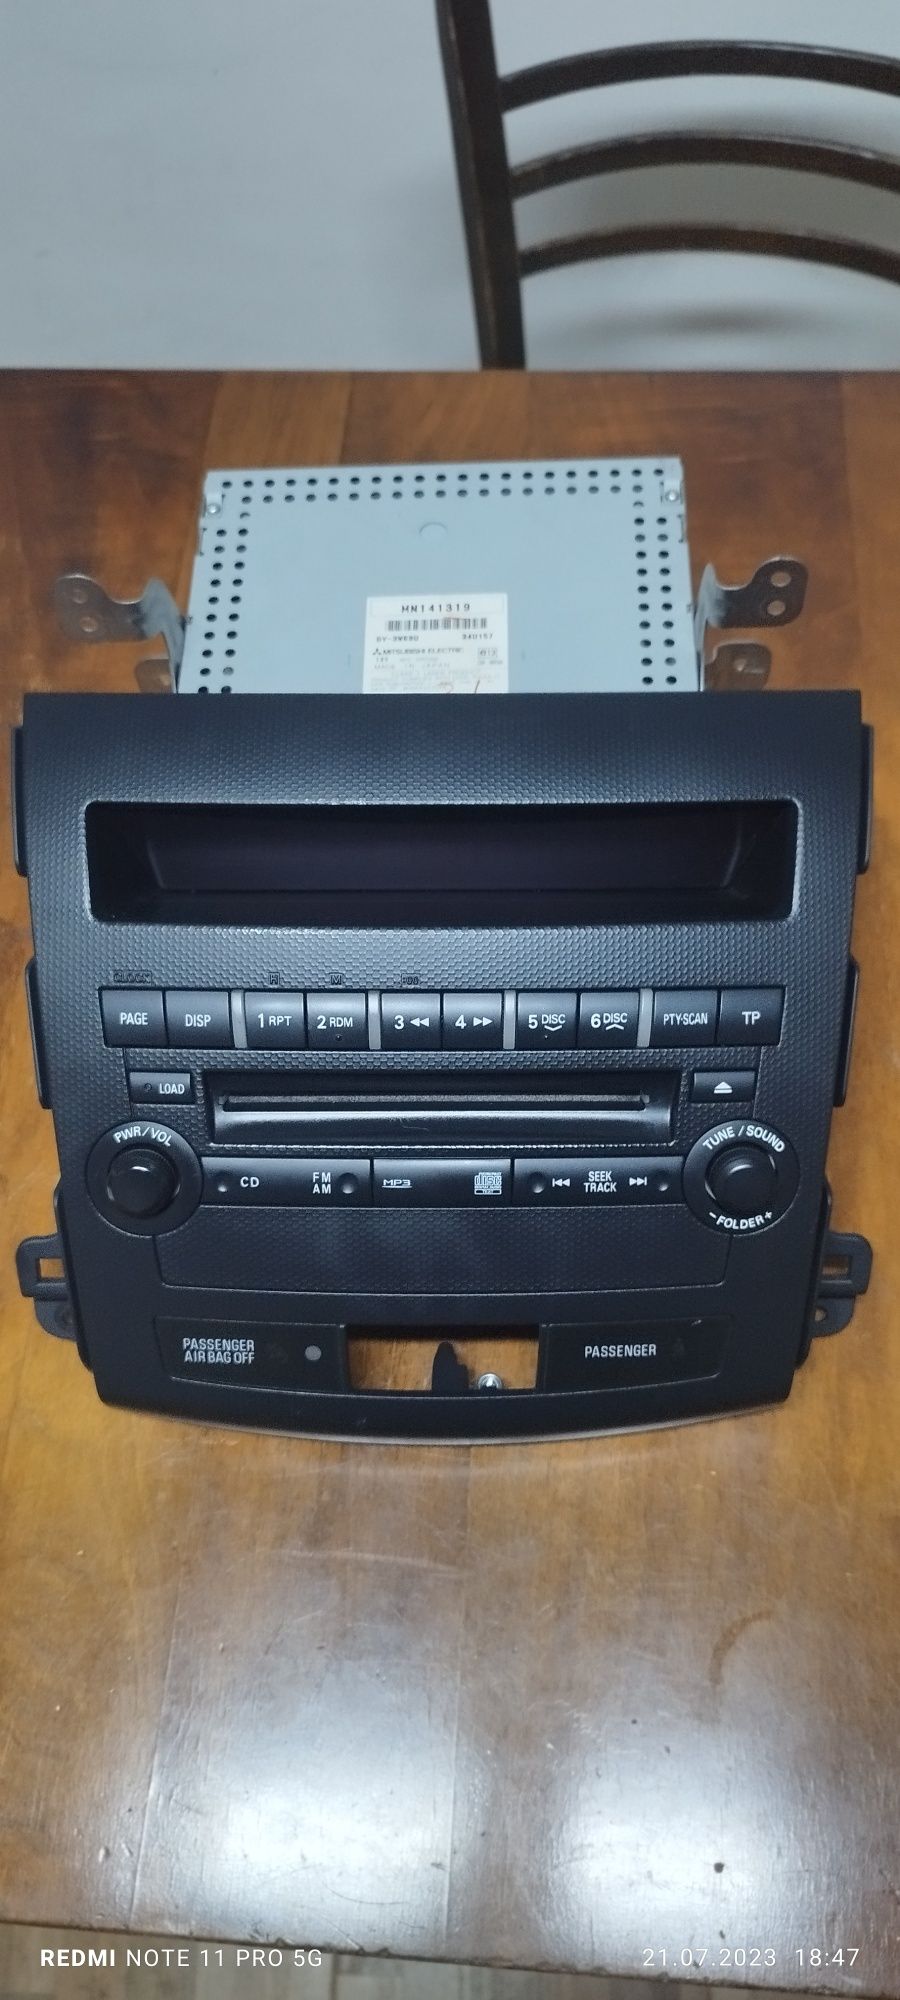 Vanzare sistem audio Mitsubishi otlander